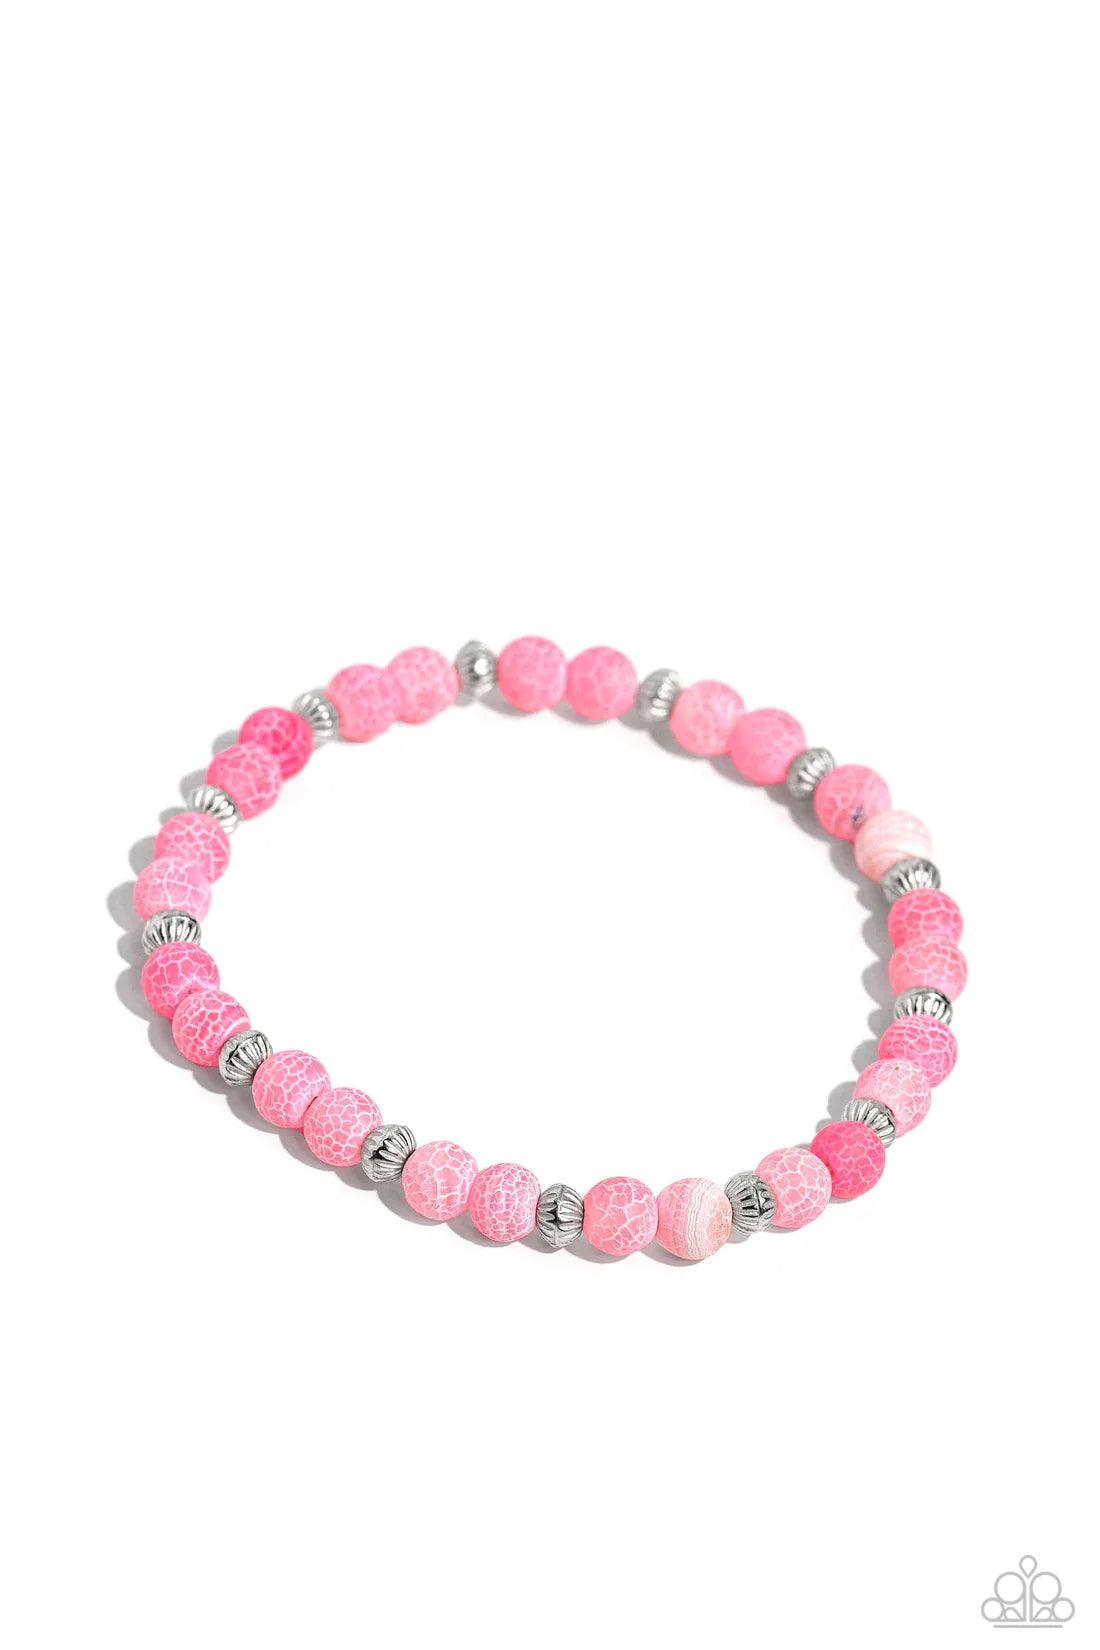 Paparazzi Bracelets - Ethereally Earthy - Pink